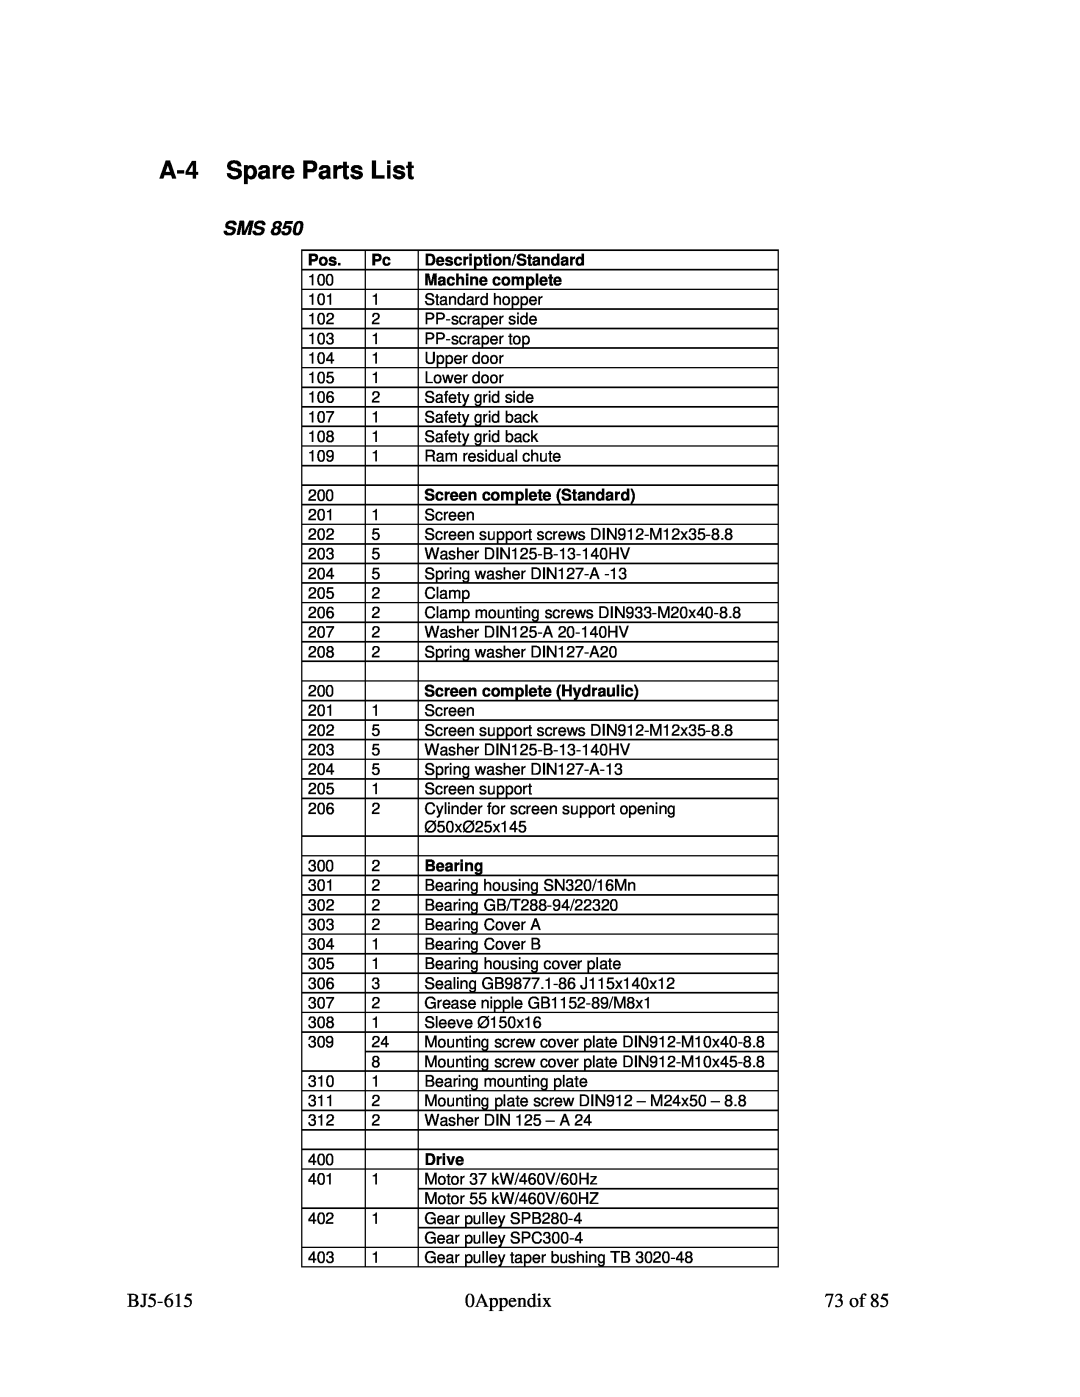 Sterling 2000, 1200 A-4Spare Parts List, Description/Standard, Machine complete, Screen complete Standard, Bearing, Drive 